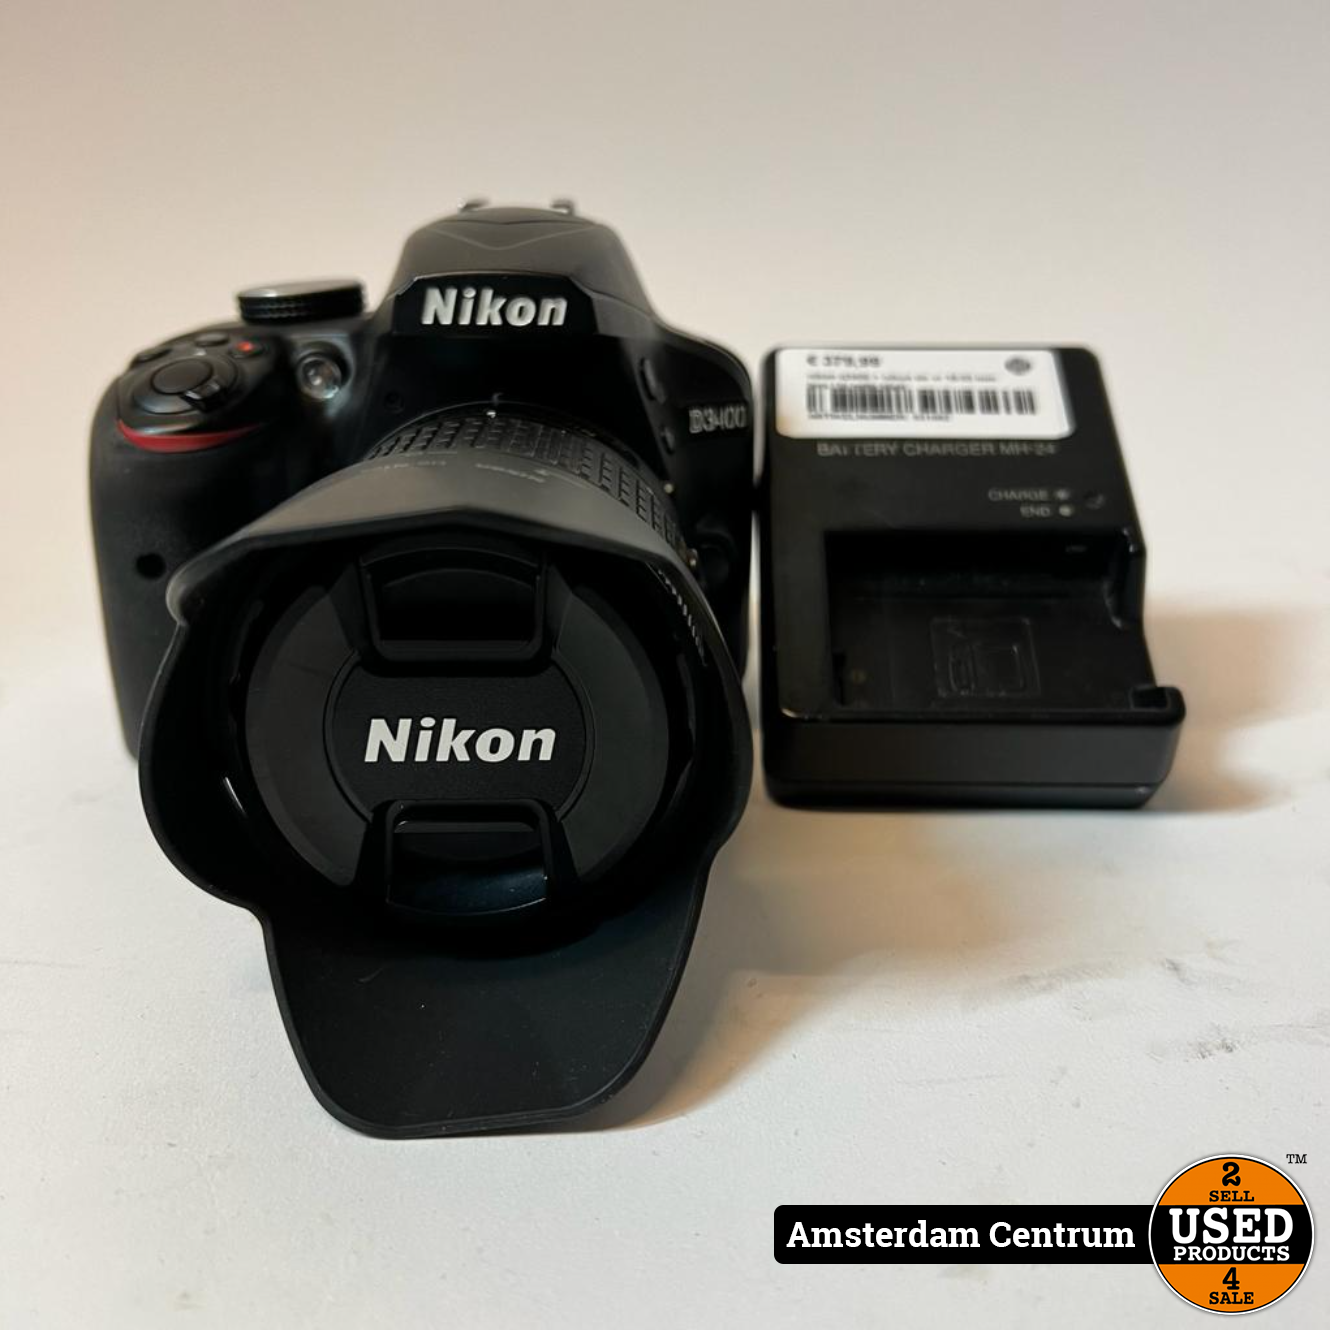 Perth Blackborough Dankzegging eten Nikon d3400 + Nikon dx vr 18-55mm lens - Prima Staat - Used Products  Amsterdam Centrum